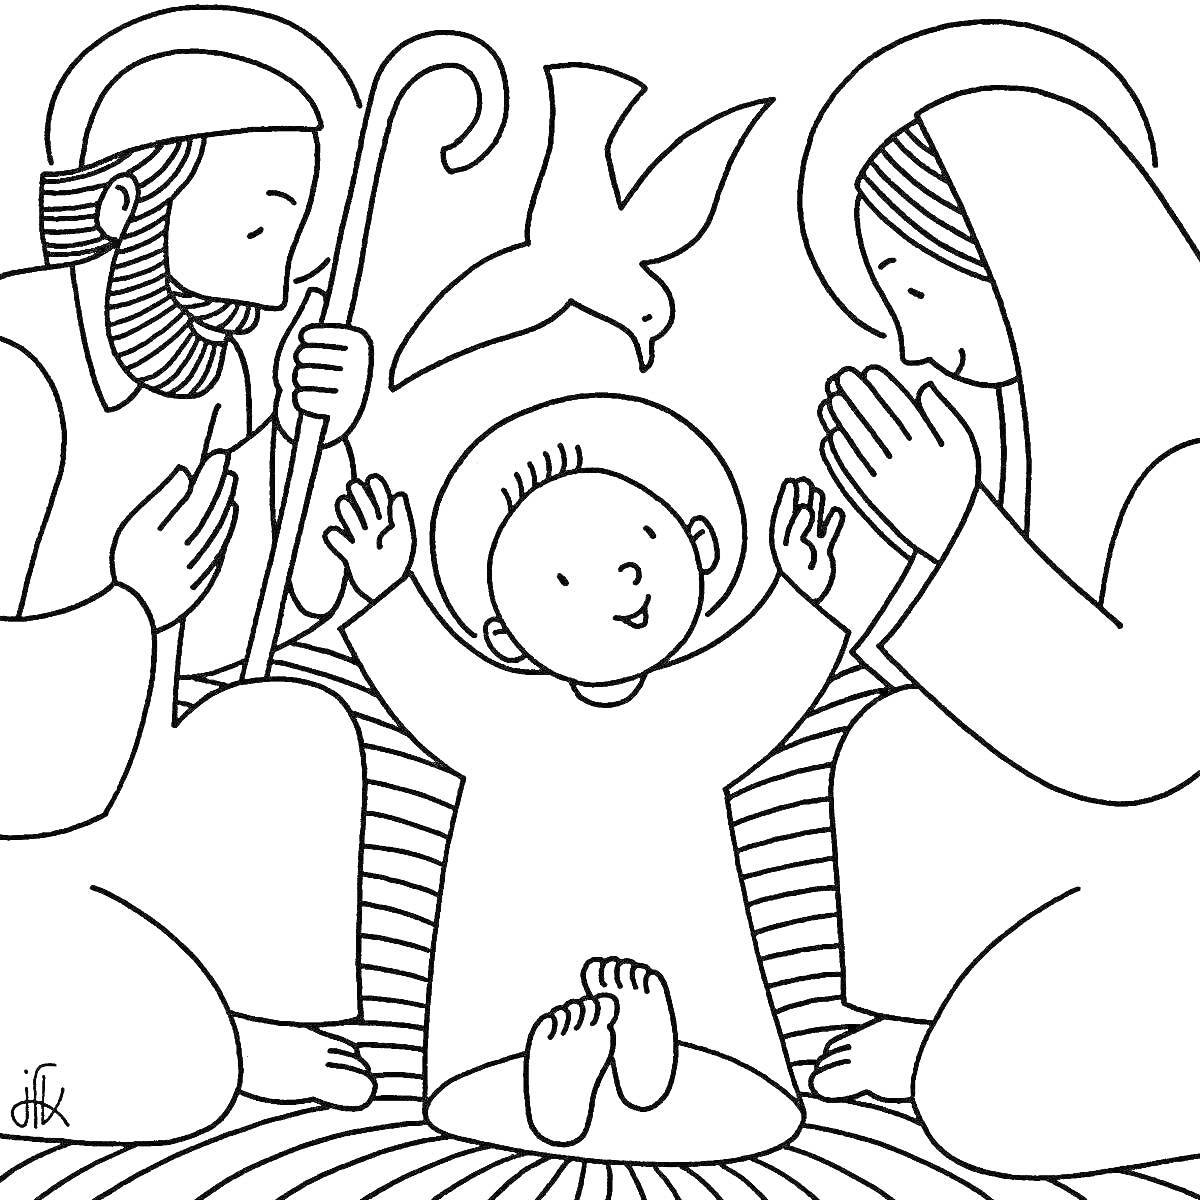 Раскраска Святое семейство: родители, младенец, голубь